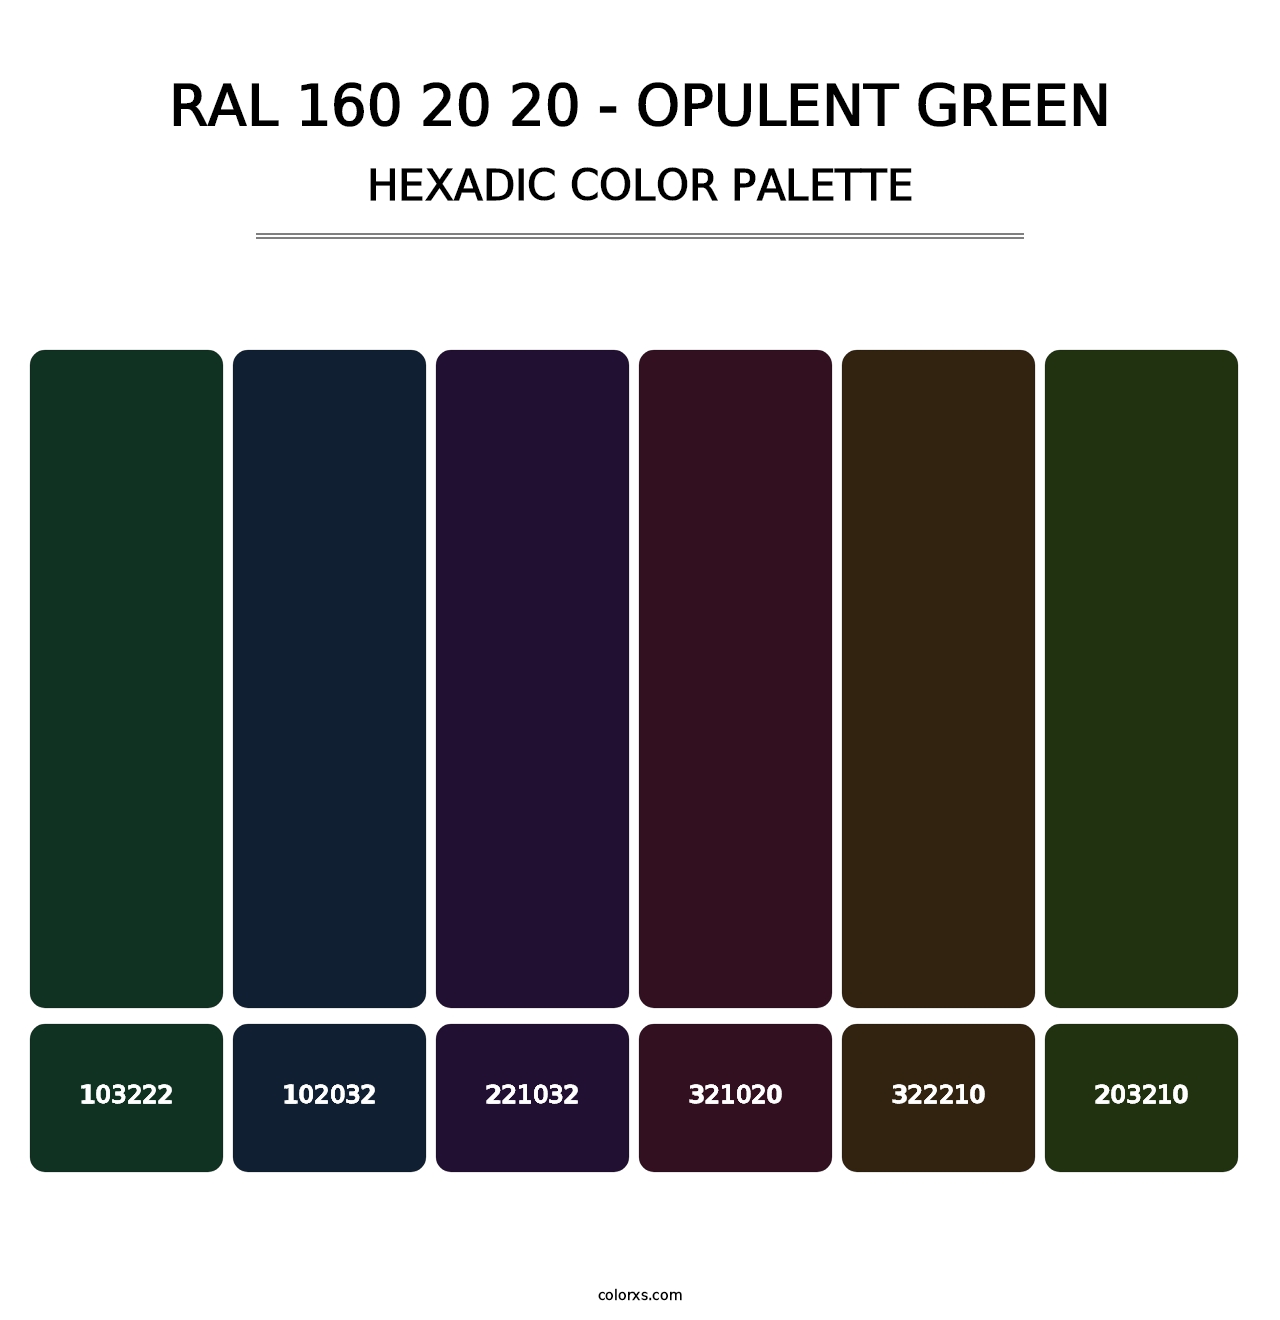 RAL 160 20 20 - Opulent Green - Hexadic Color Palette